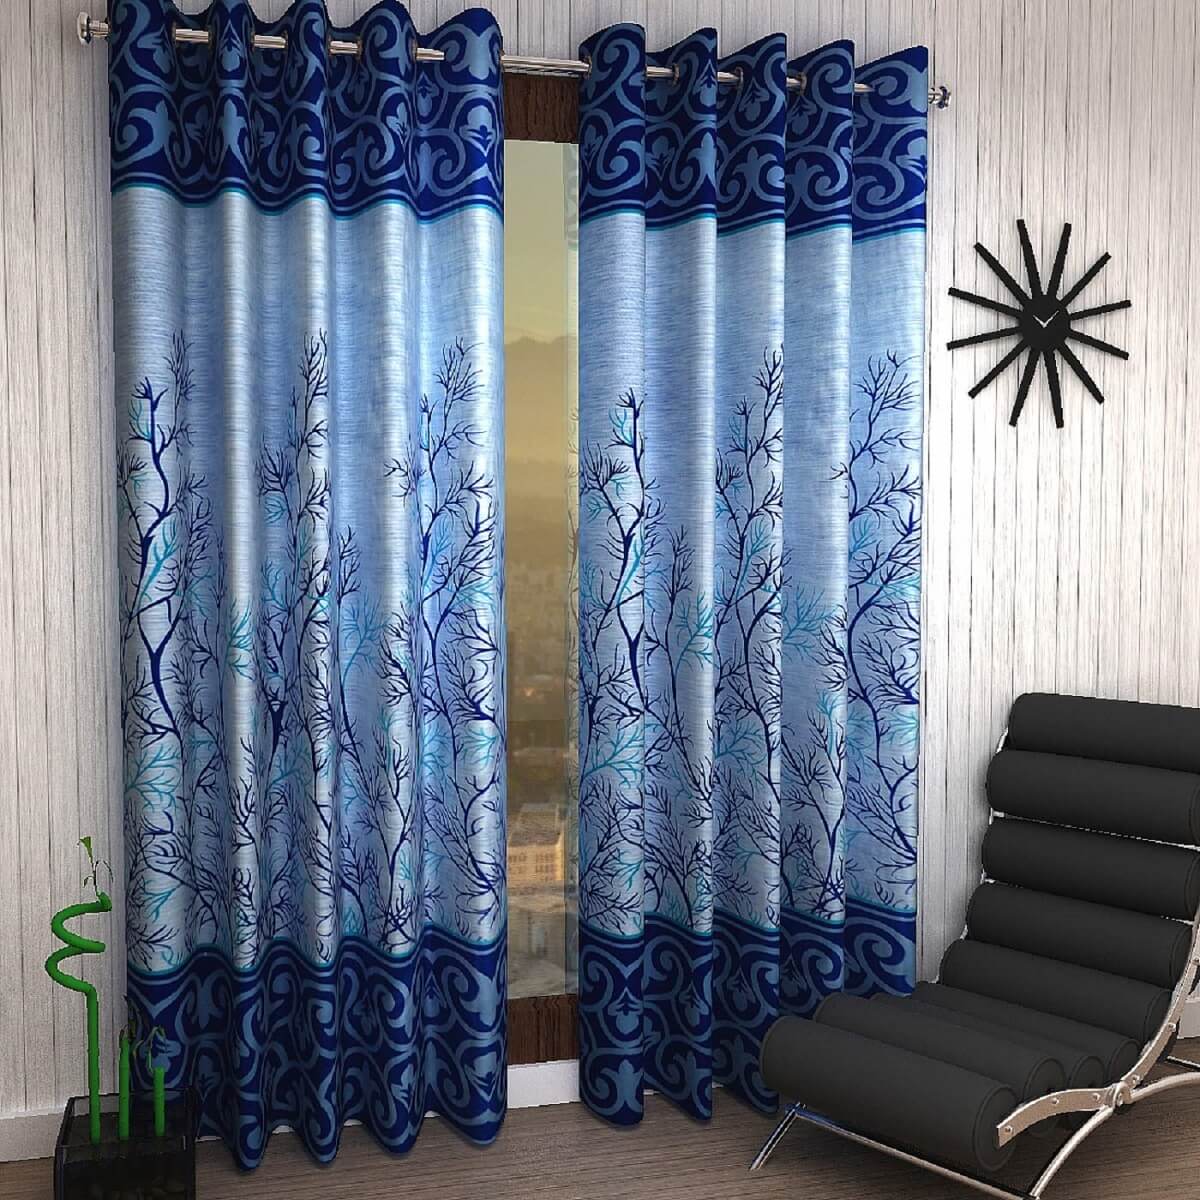 Window Curtain Designs In Sri Lanka 1 